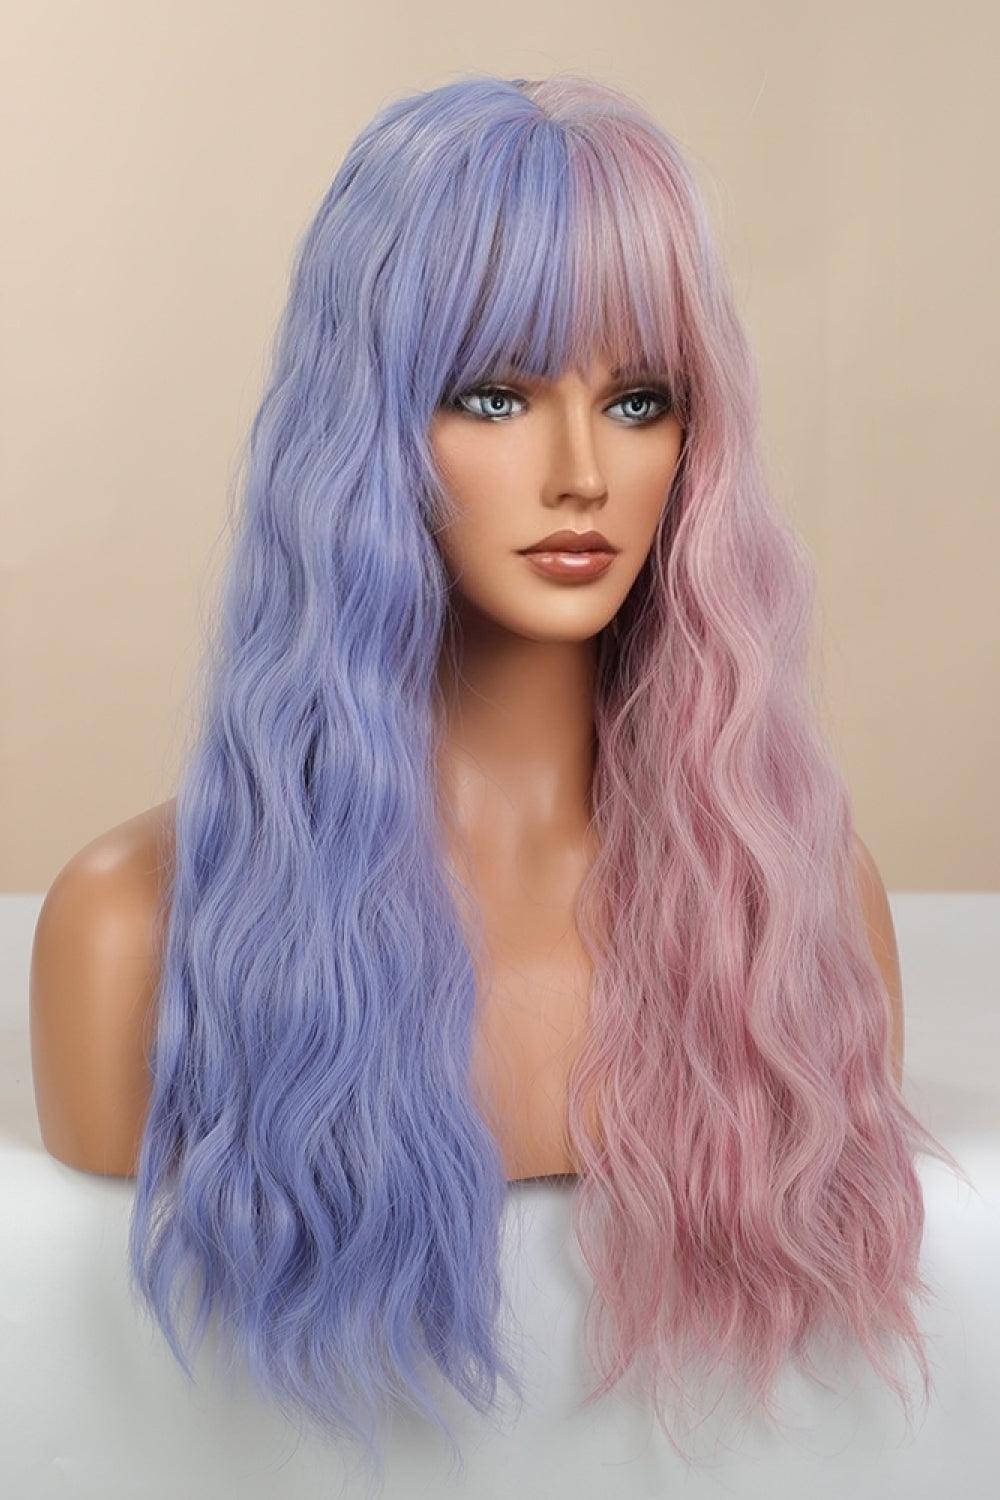 13*1" Full-Machine Wigs Synthetic Long Wave 26" in Blue/Pink Split Dye - Twin Chronicles 